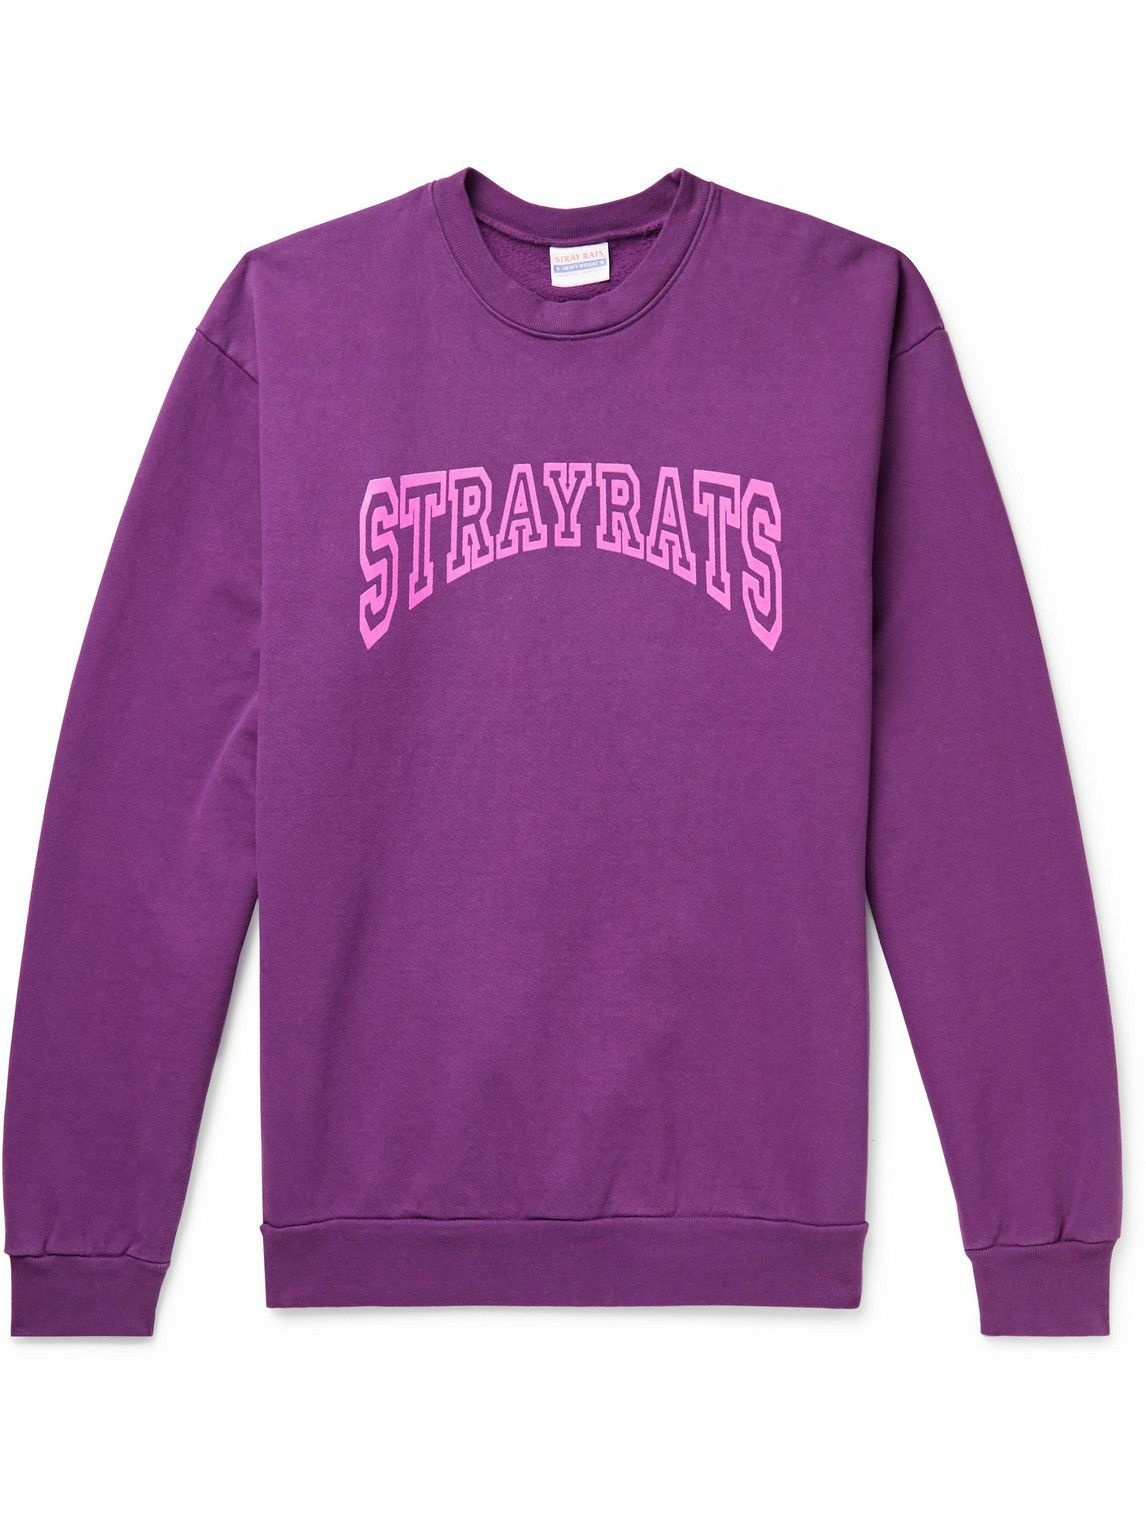 Photo: Stray Rats - Logo-Print Cotton-Jersey Sweatshirt - Purple